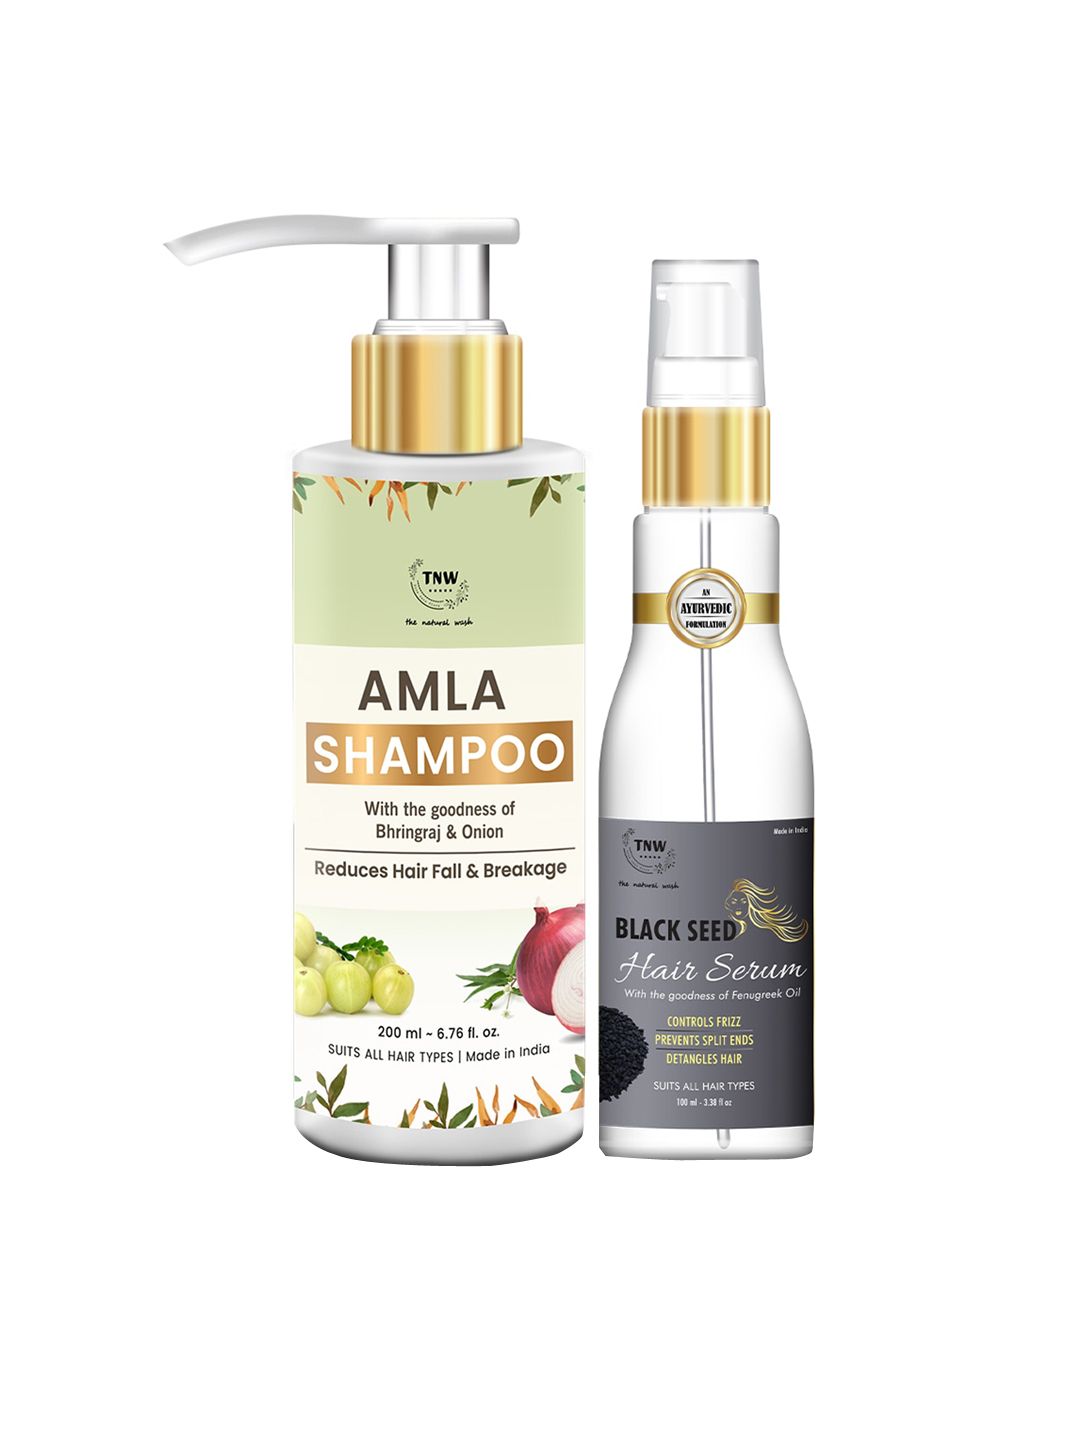 TNW the natural wash White Amla Shampoo & Hair Serum Hair Care Kit Price in India